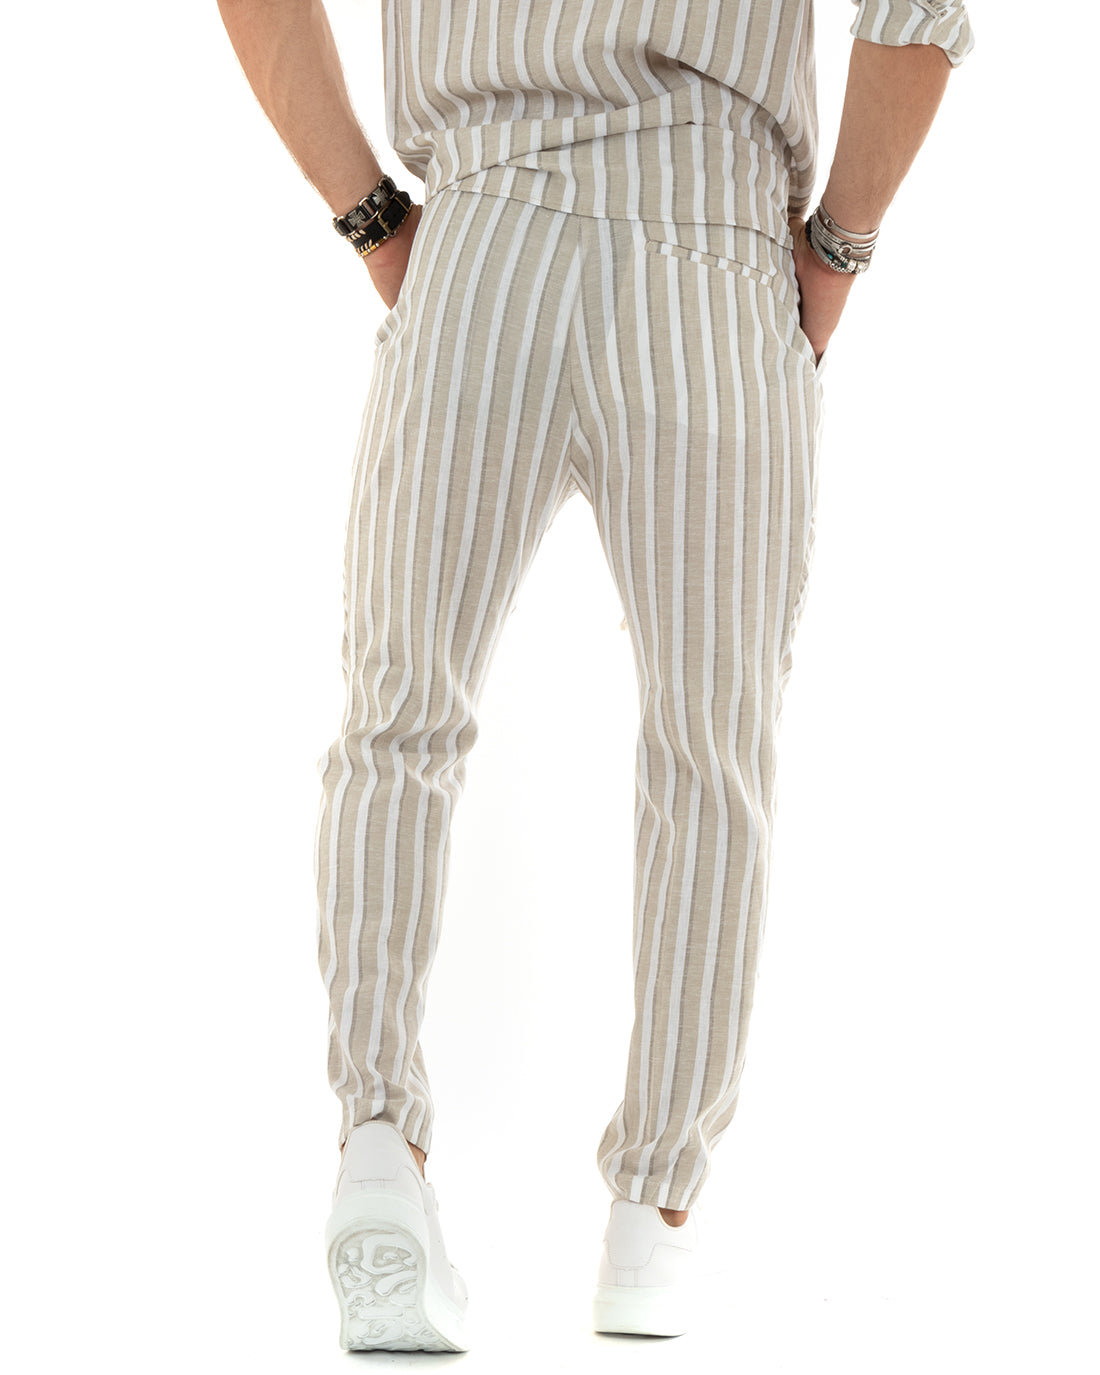 Complete Coordinated Set for Men Striped Linen Elastic Trousers Shirt Long Sleeve Mandarin Collar Beige GIOSAL-OU2340A